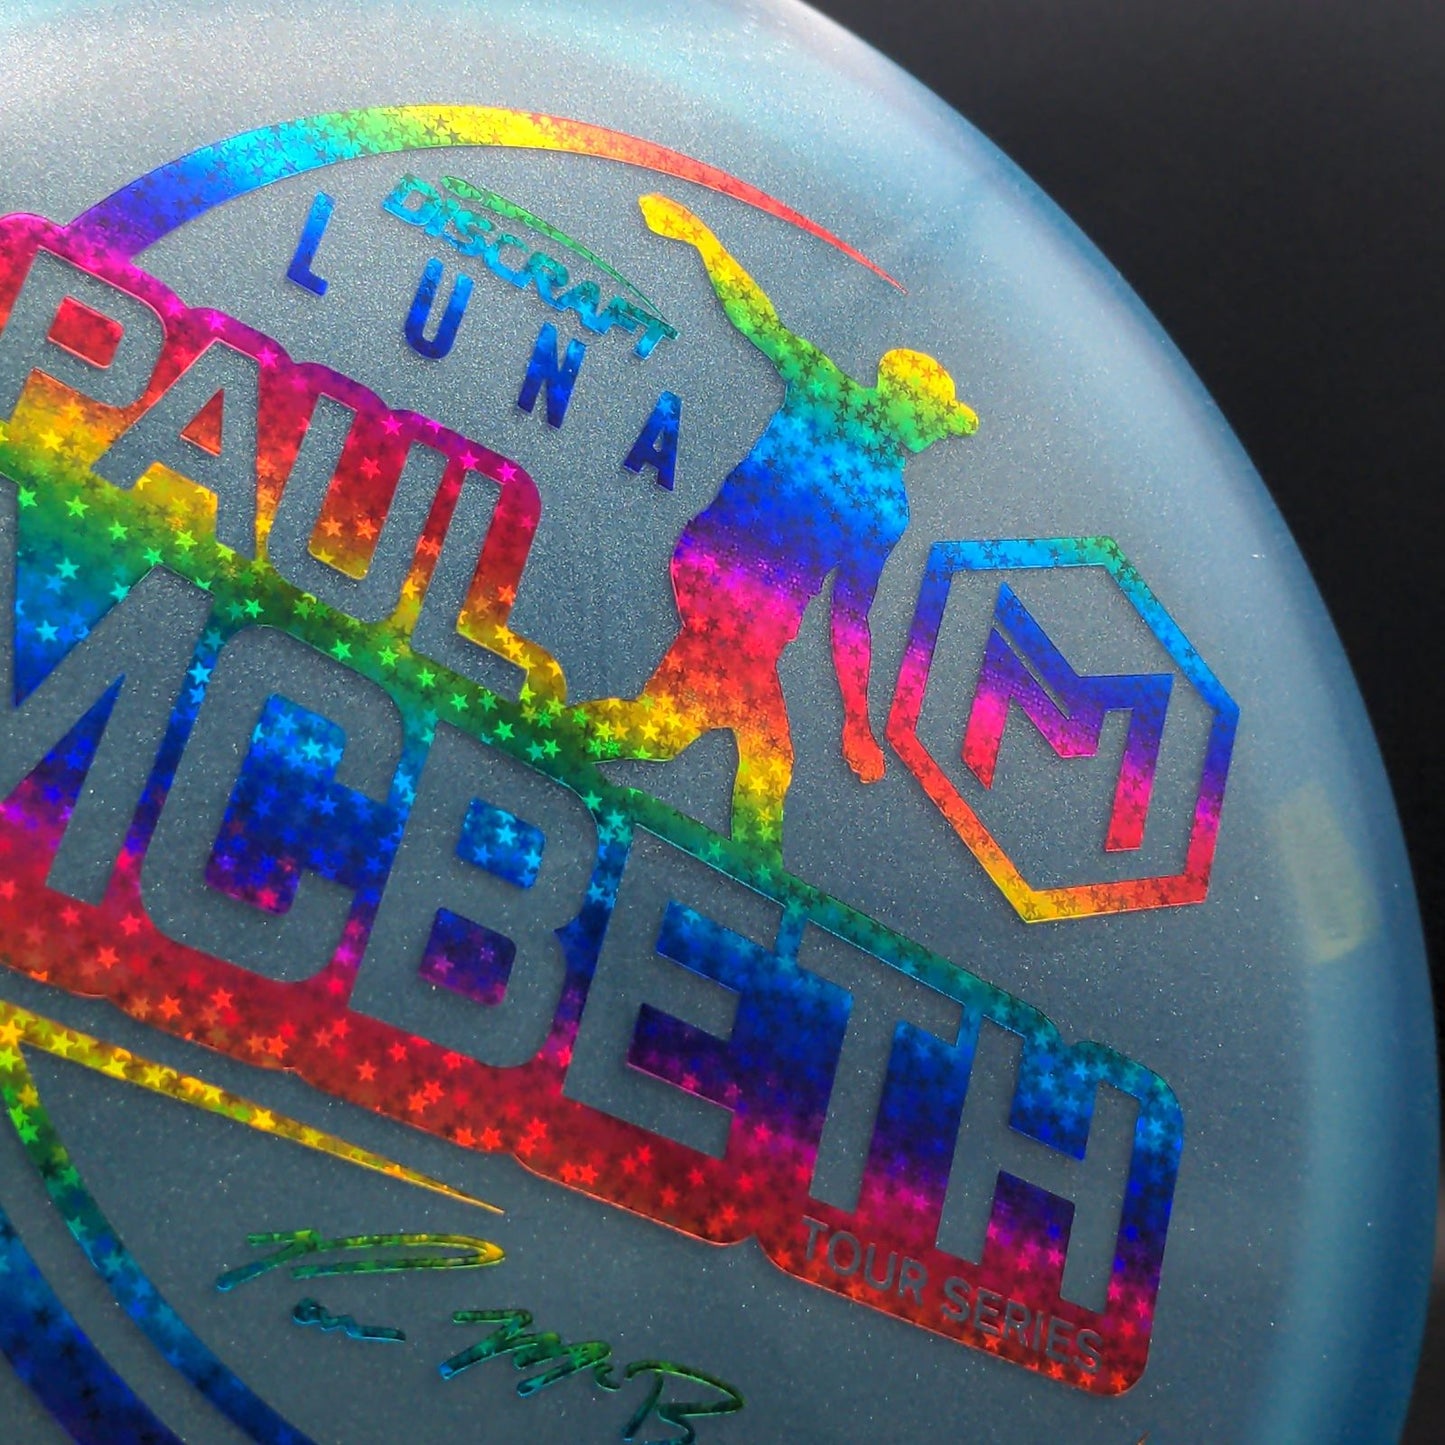 Metallic Z Luna - 2021 Paul McBeth TS - Pearly Ocean Blue / Rainbow Holo Stars Discraft